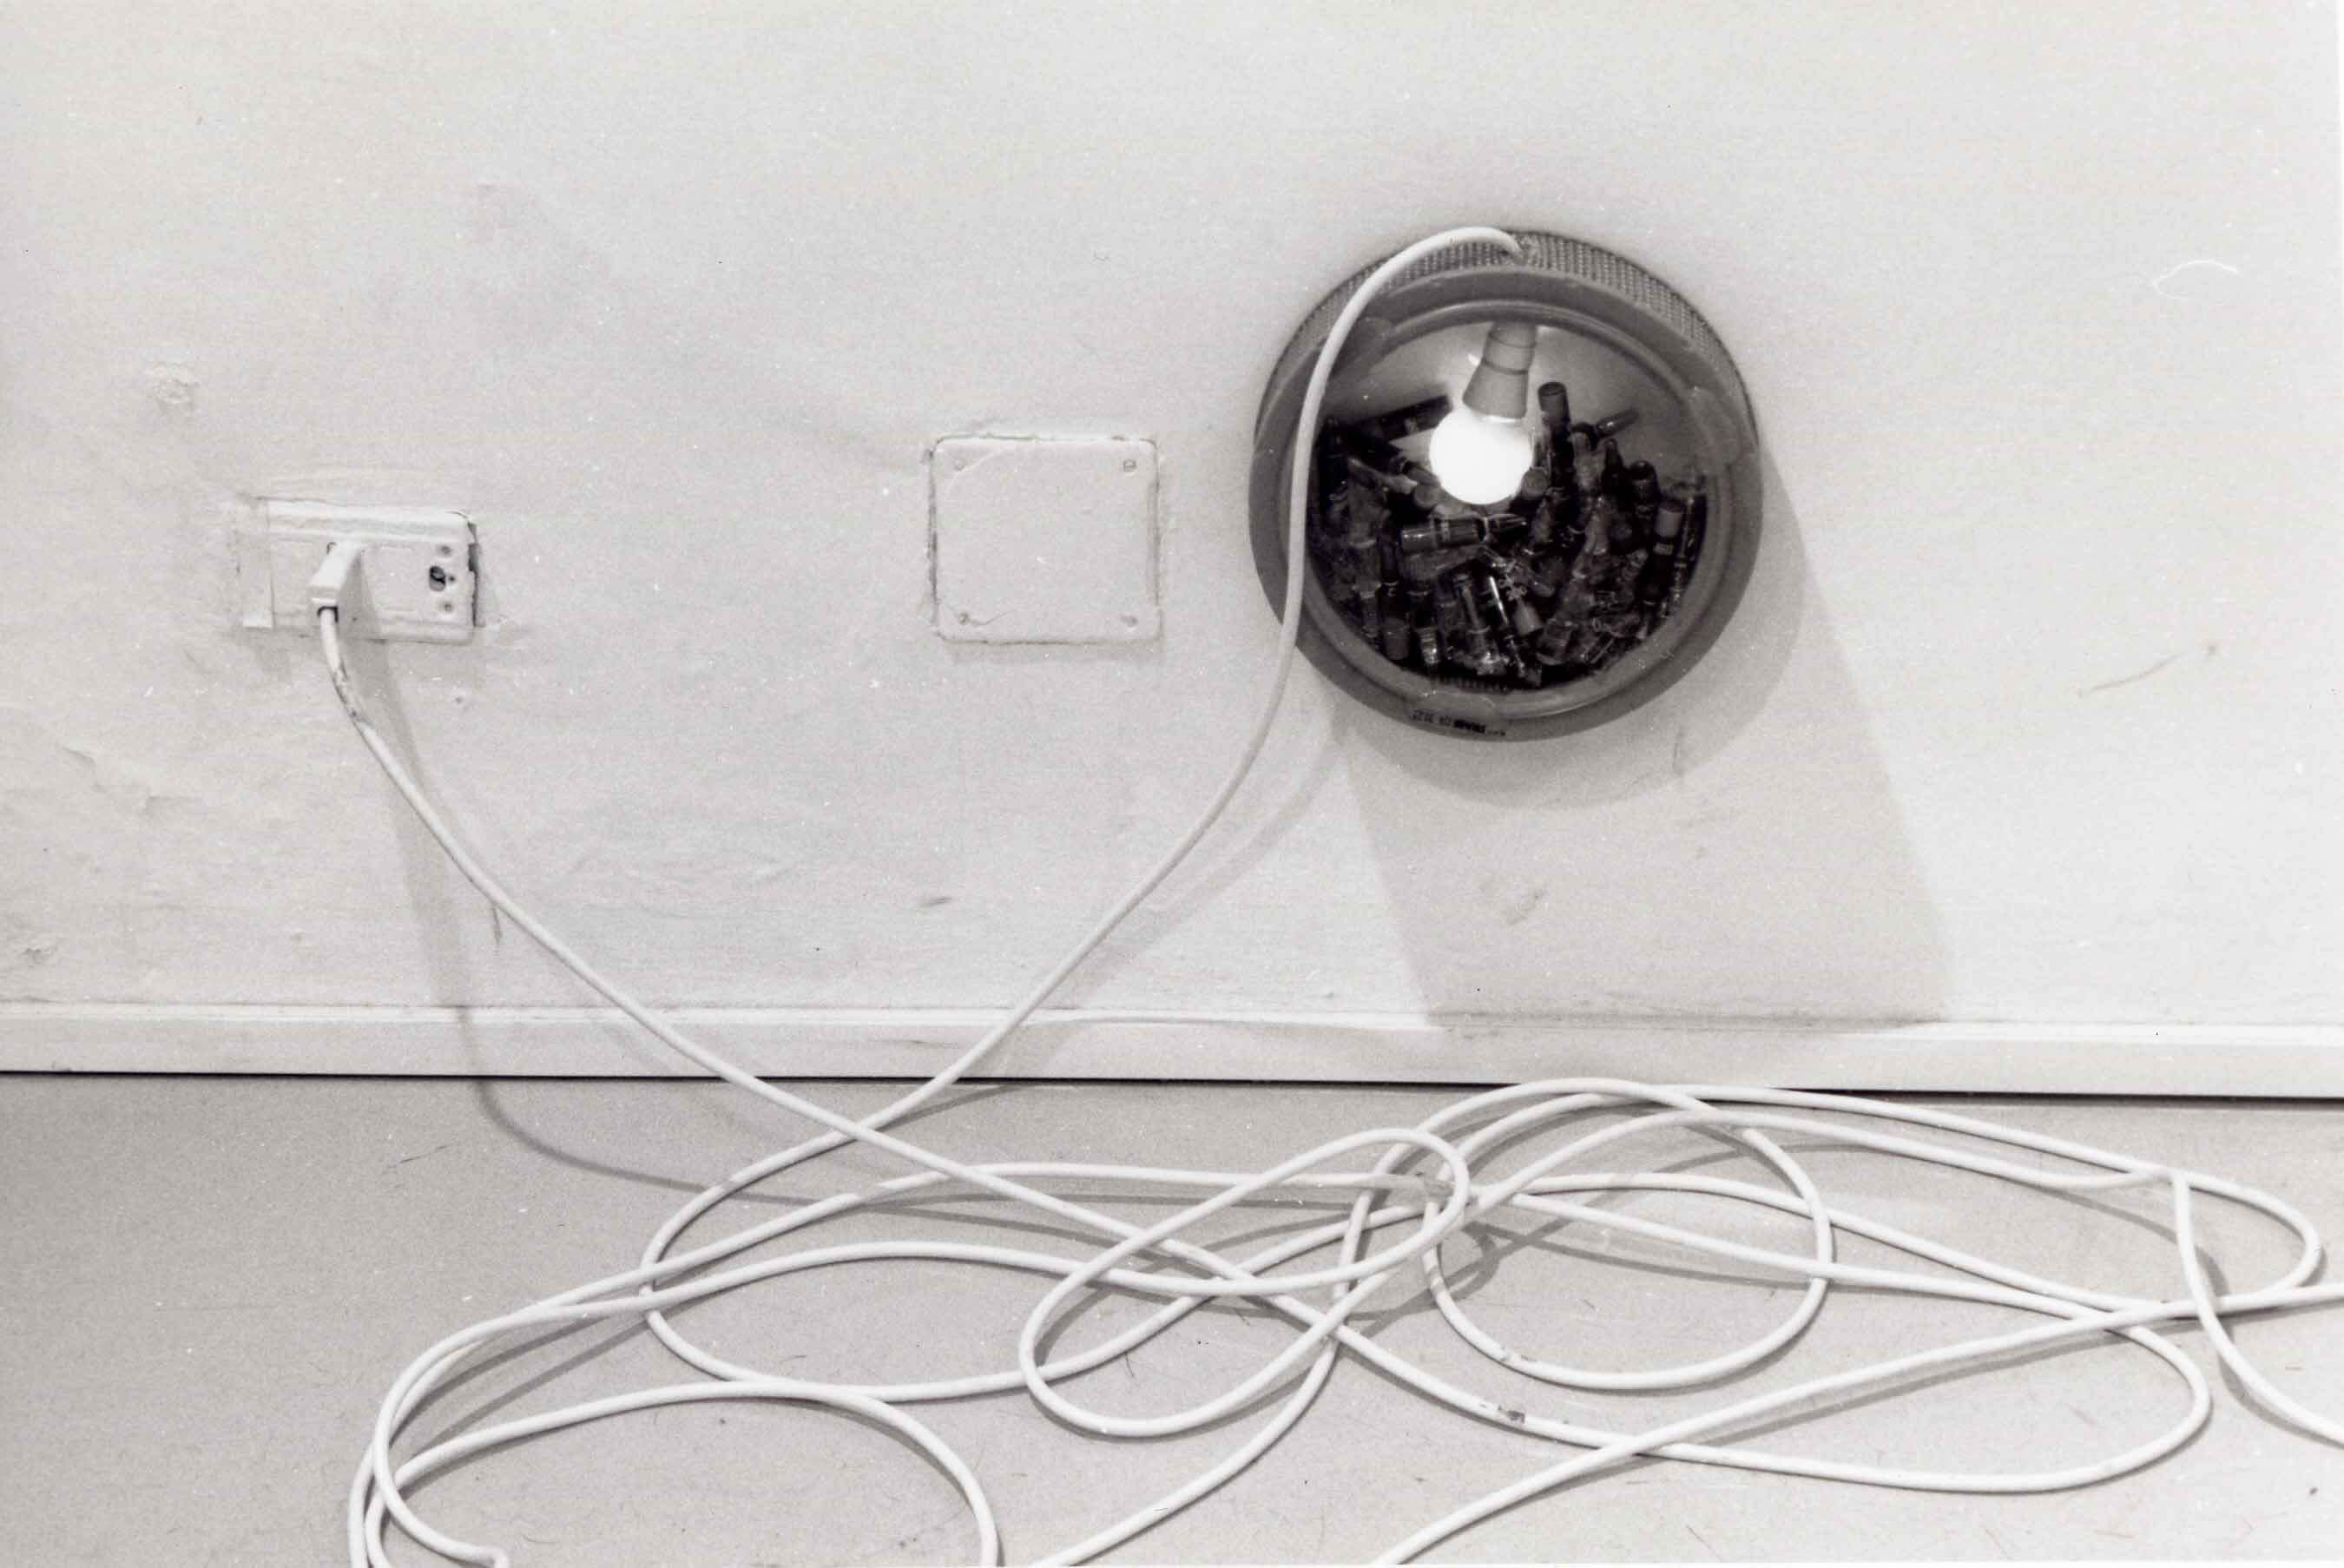 Claudio Pieroni, Sala macchine, 1992, exhibition view